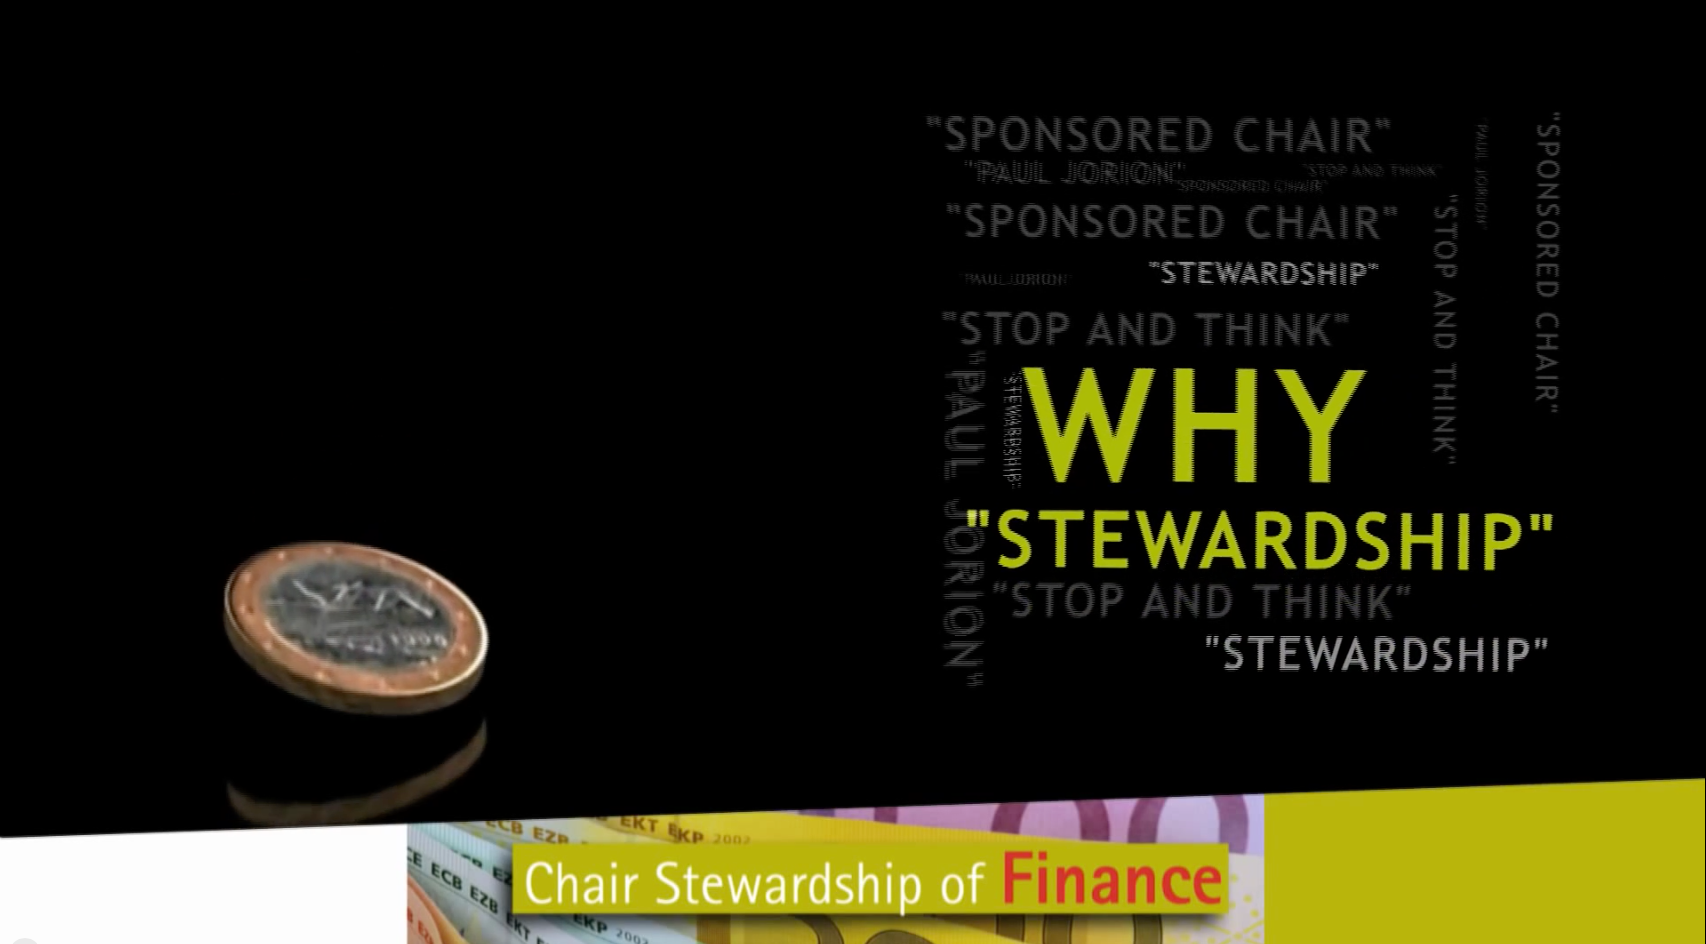 Why Stewardship?